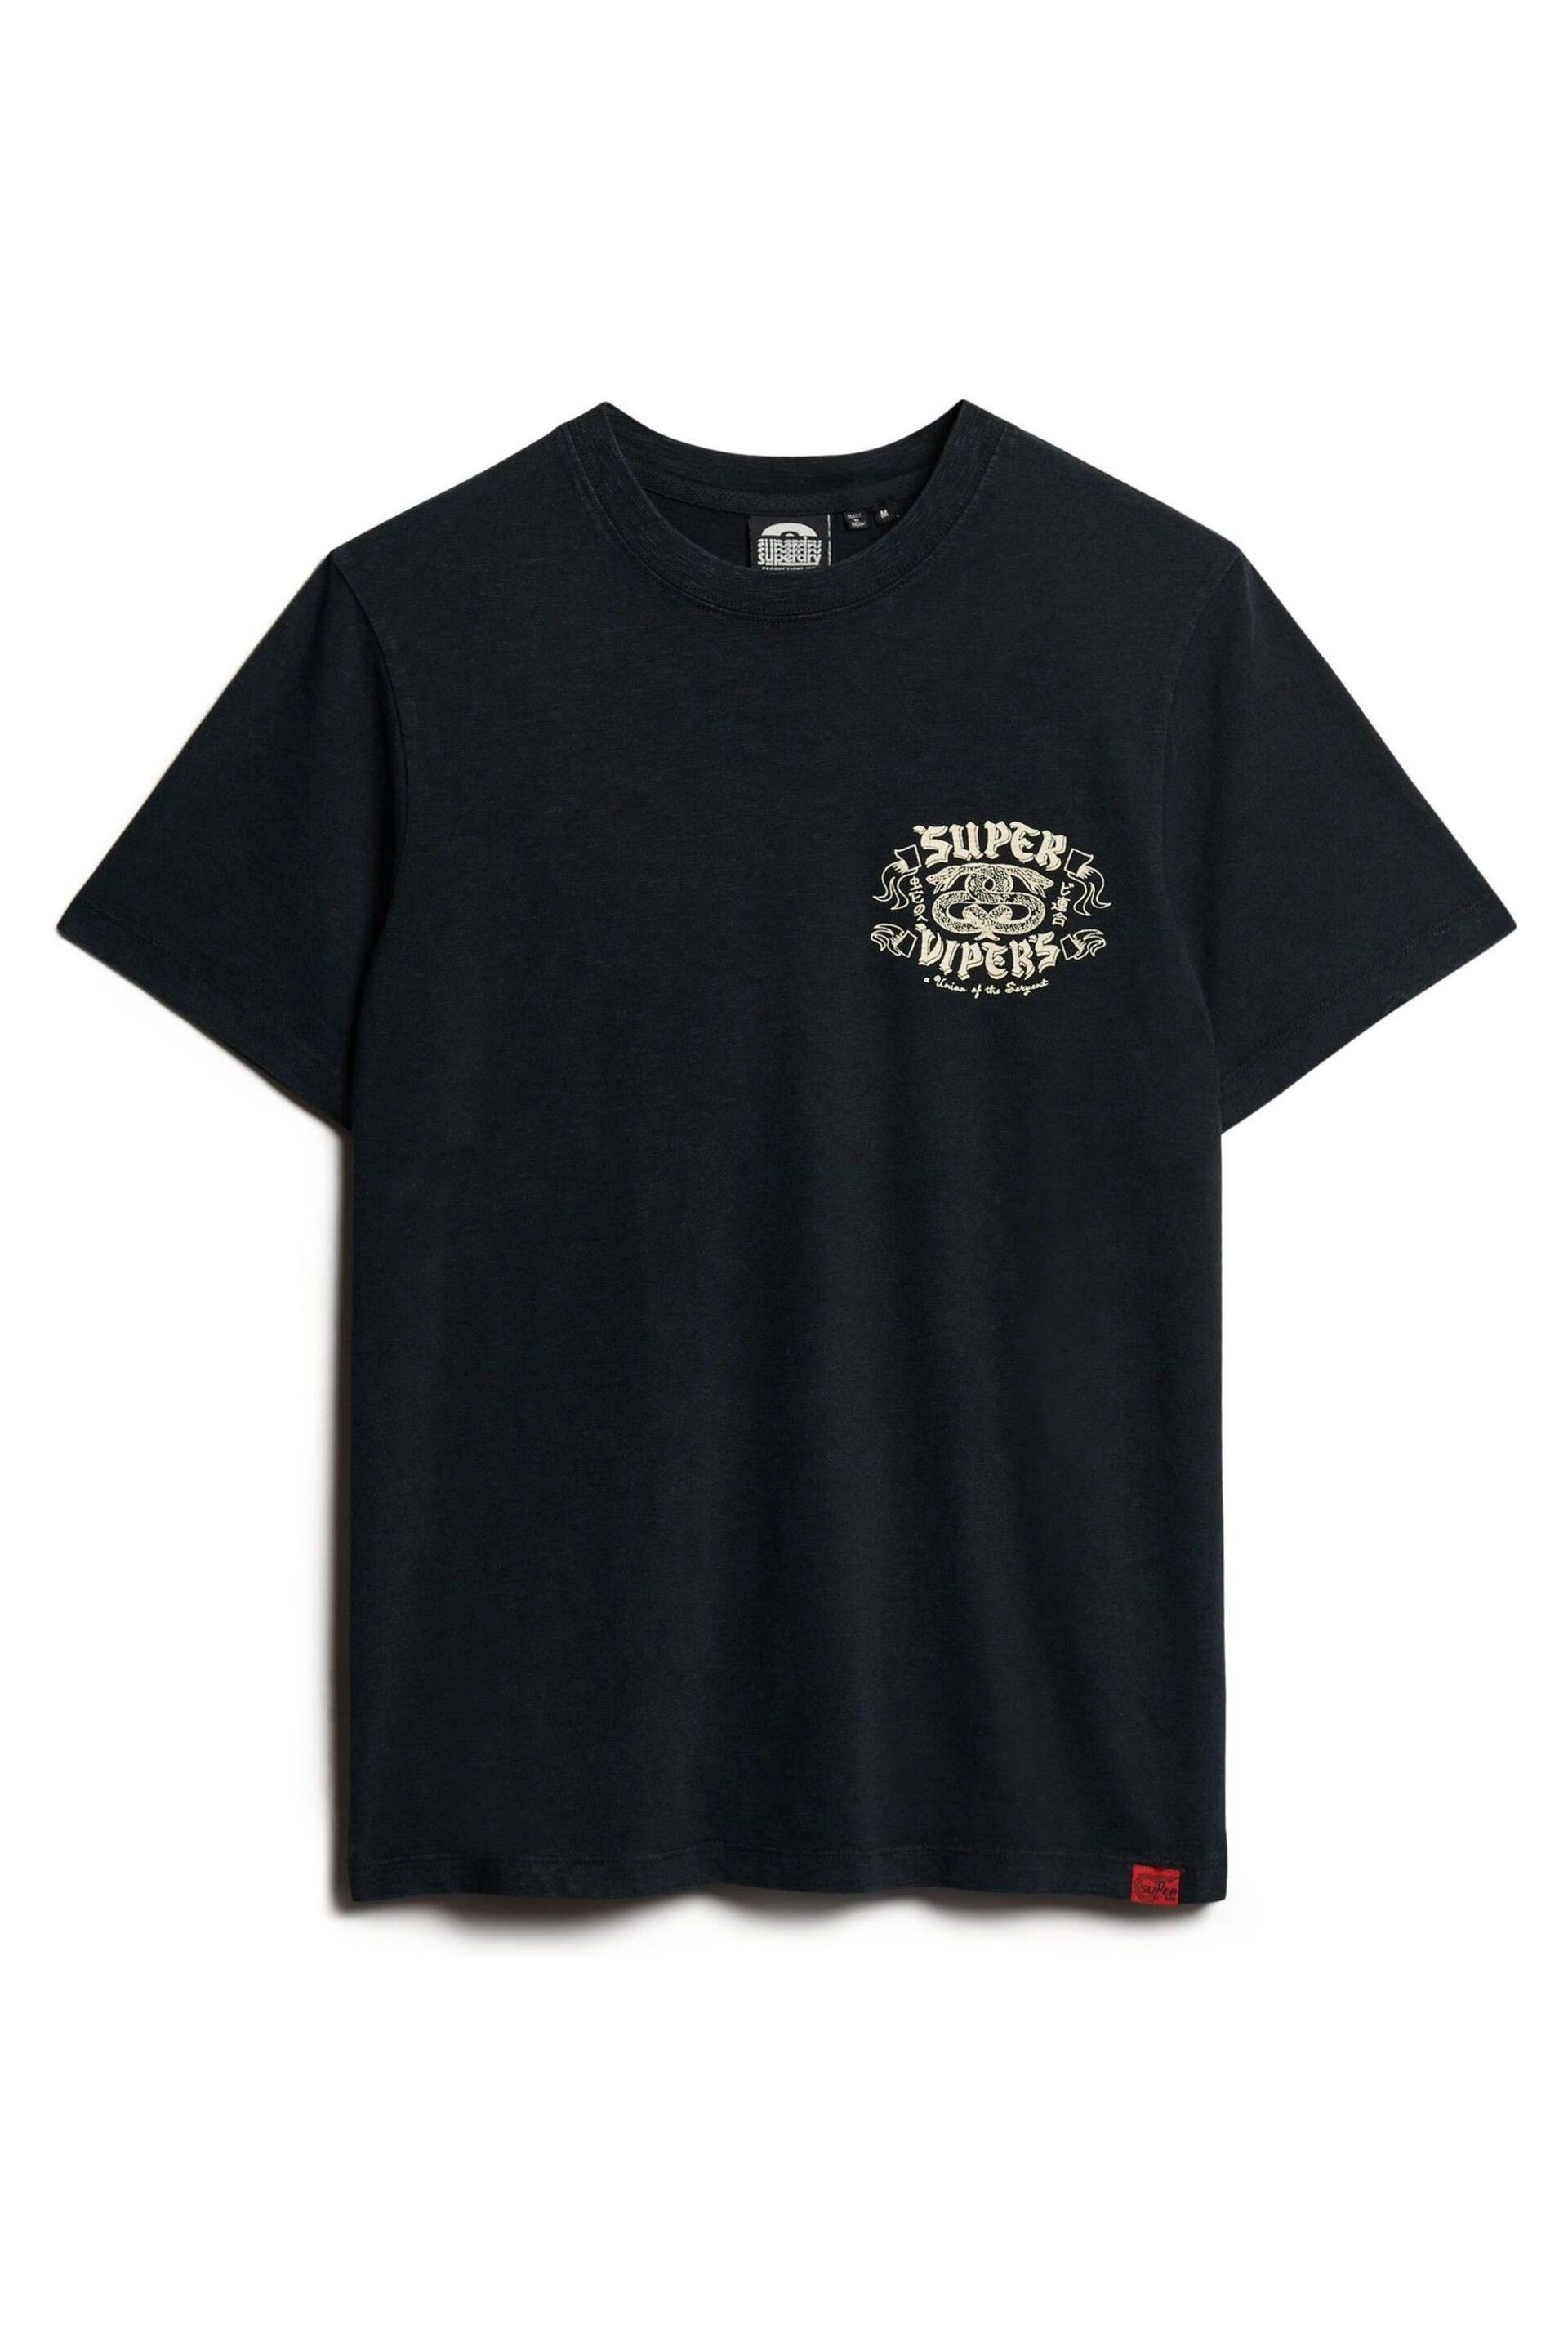 Superdry Black Retro Rocker Graphic T-Shirt - Image 4 of 8